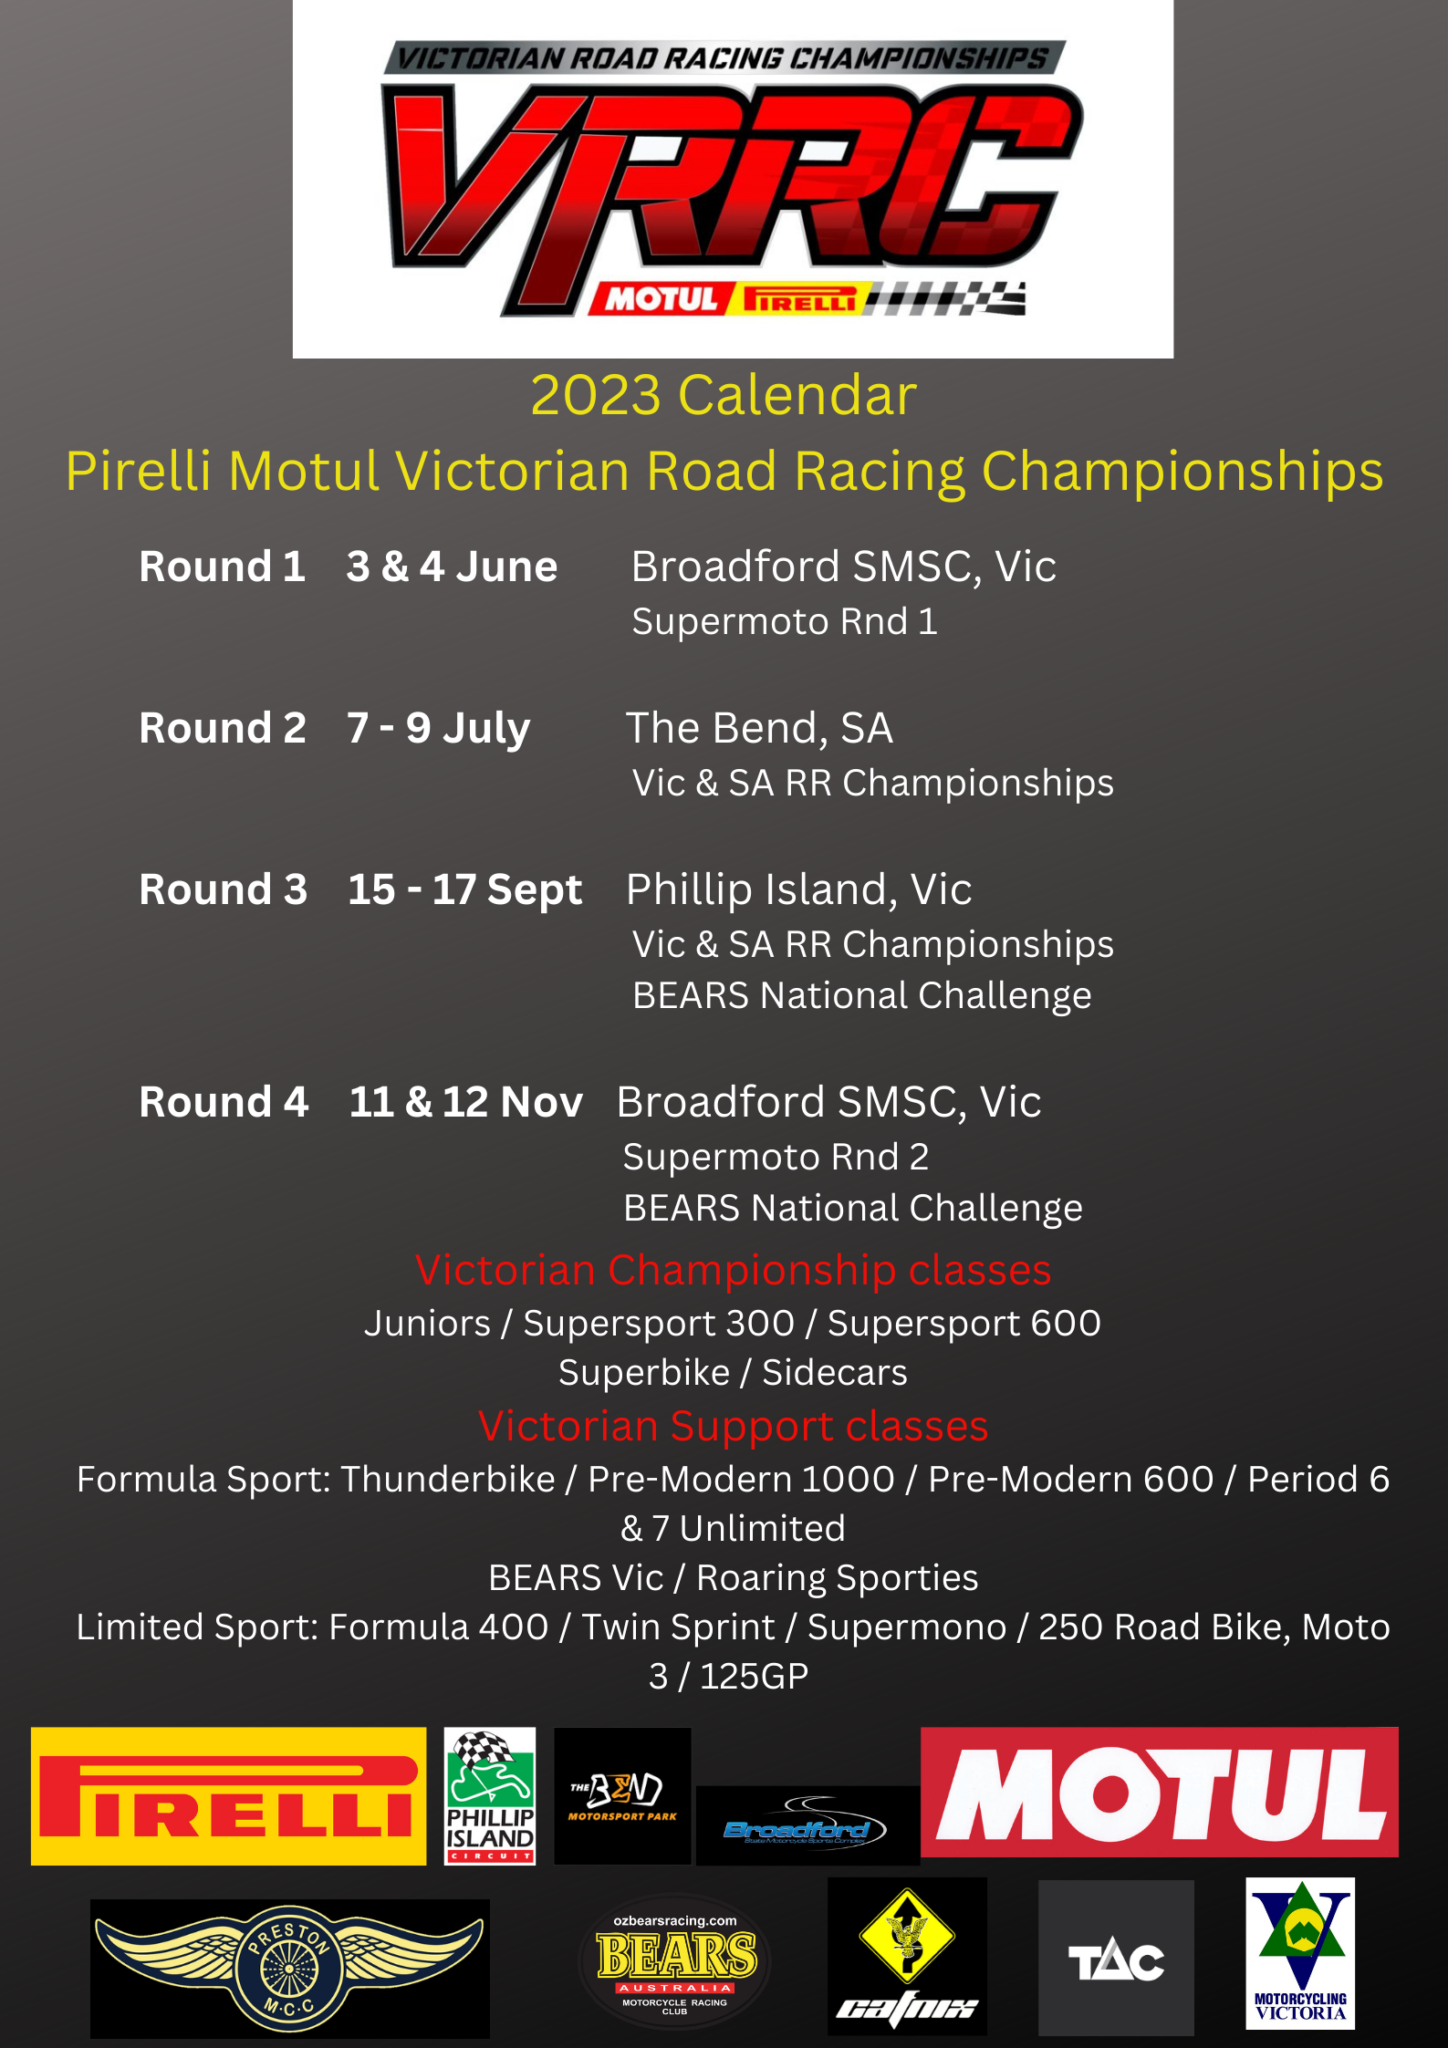 2023 Pirelli Motul Victorian Road Racing Championship Calendar Motorcycling Victoria